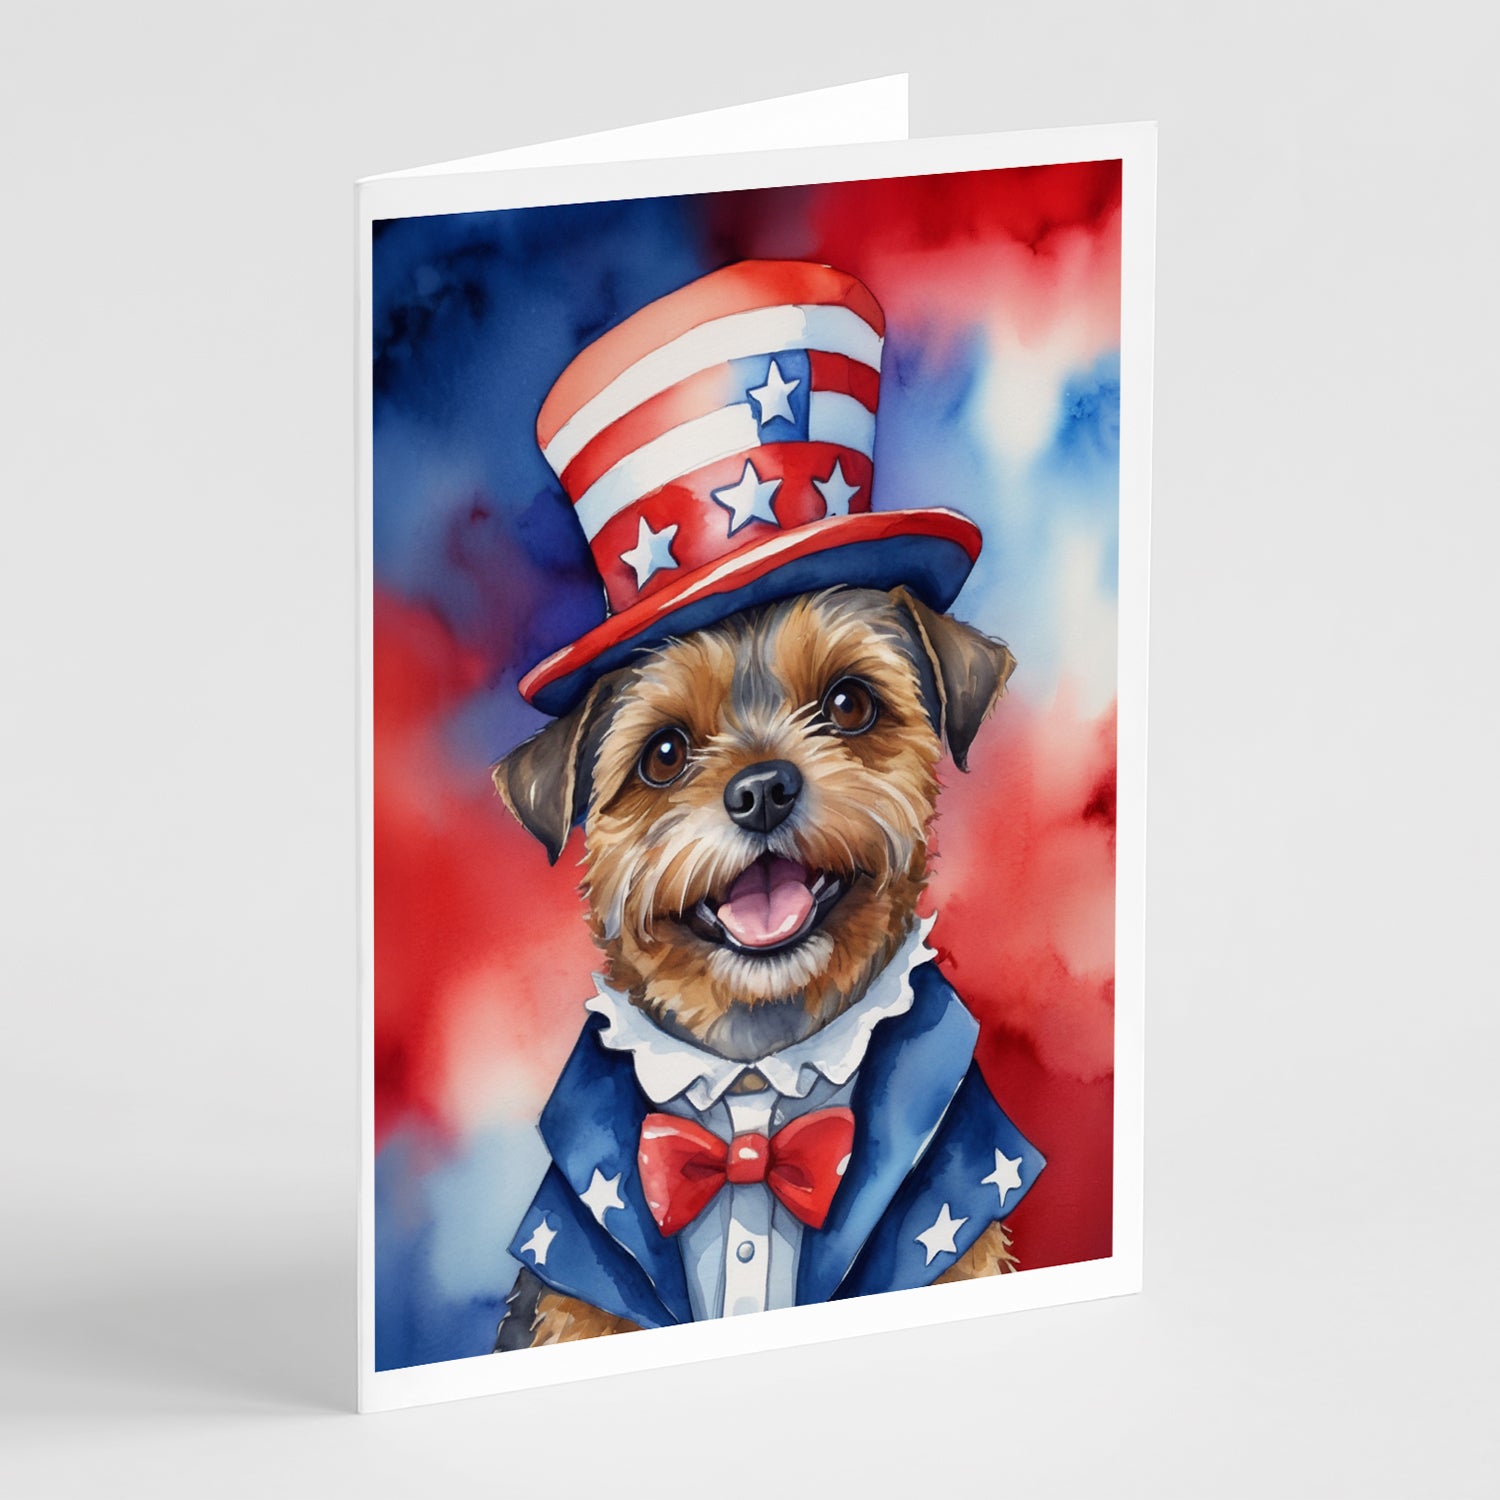 Buy this Border Terrier Patriotic American Greeting Cards Pack of 8